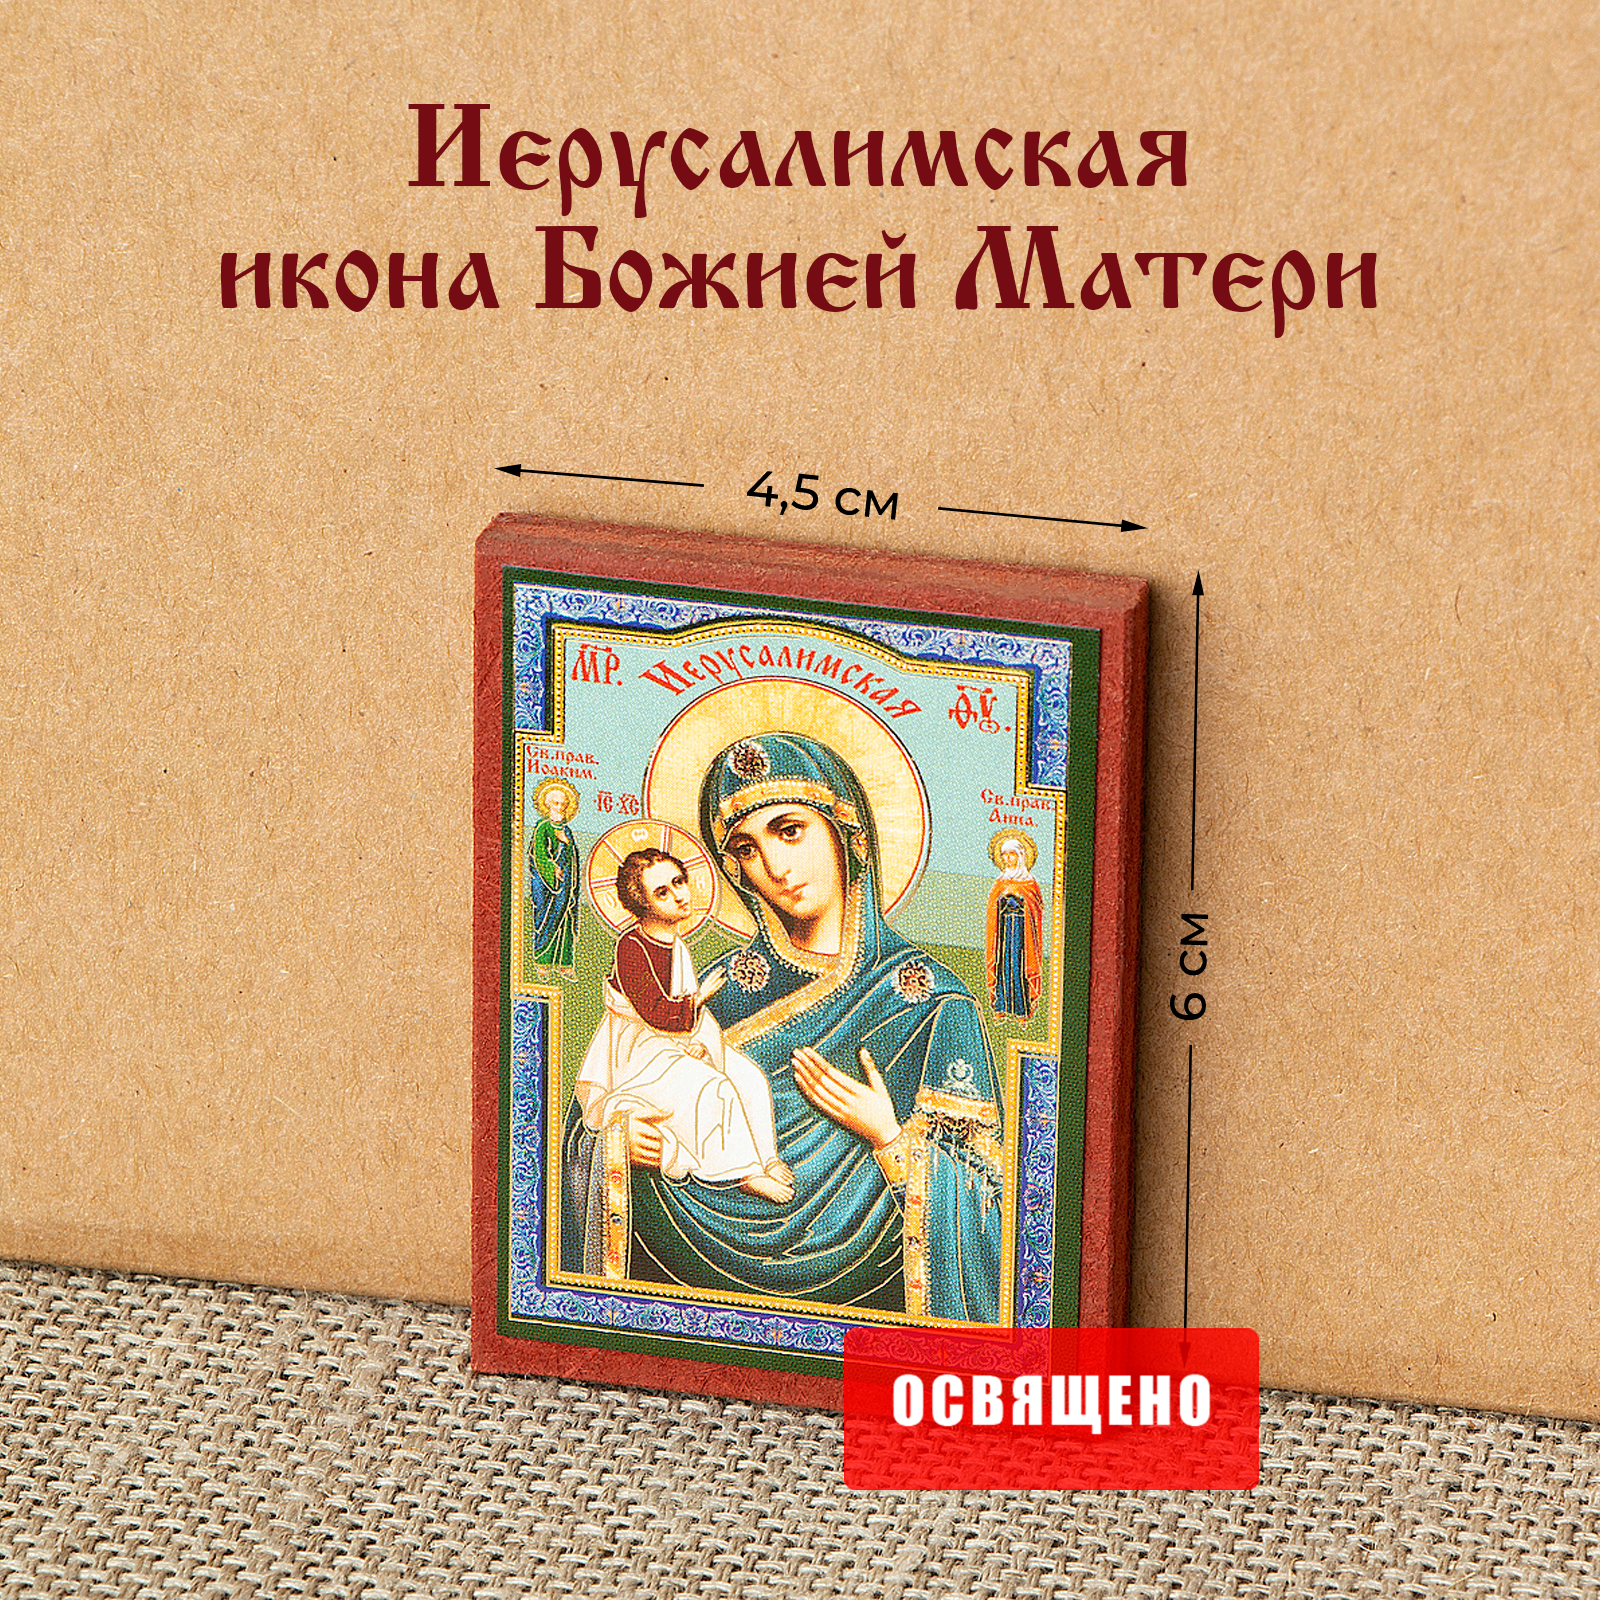 Икона Божией Матери "Иерусалимская" на МДФ 4х6